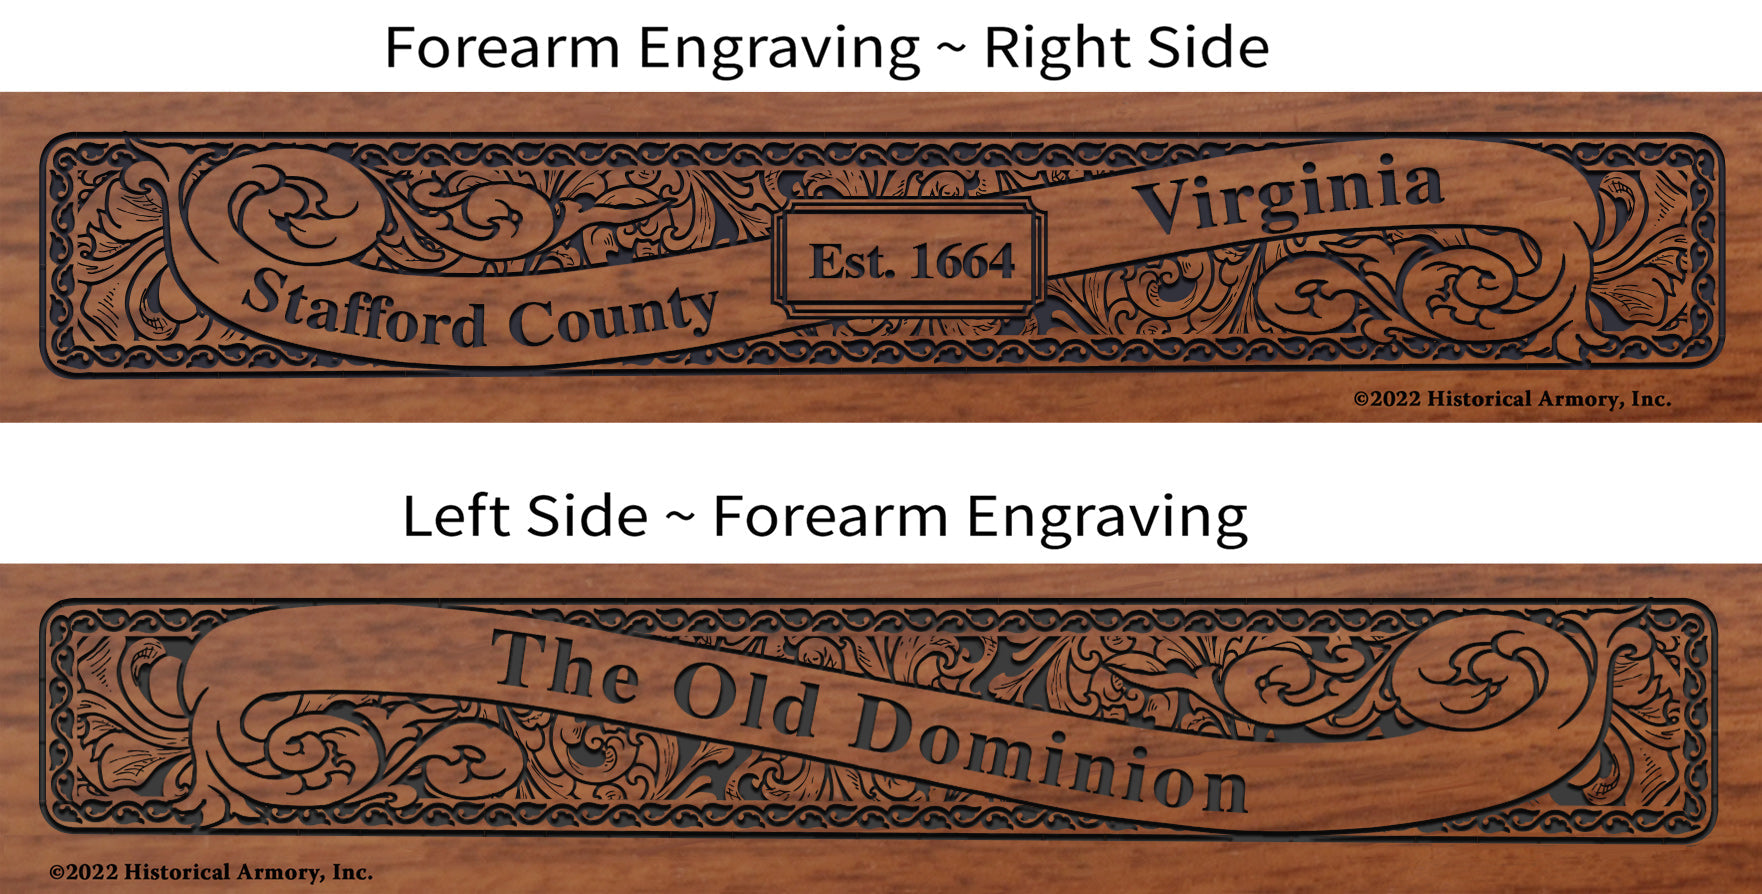 Stafford County Virginia Engraved Rifle Forearm